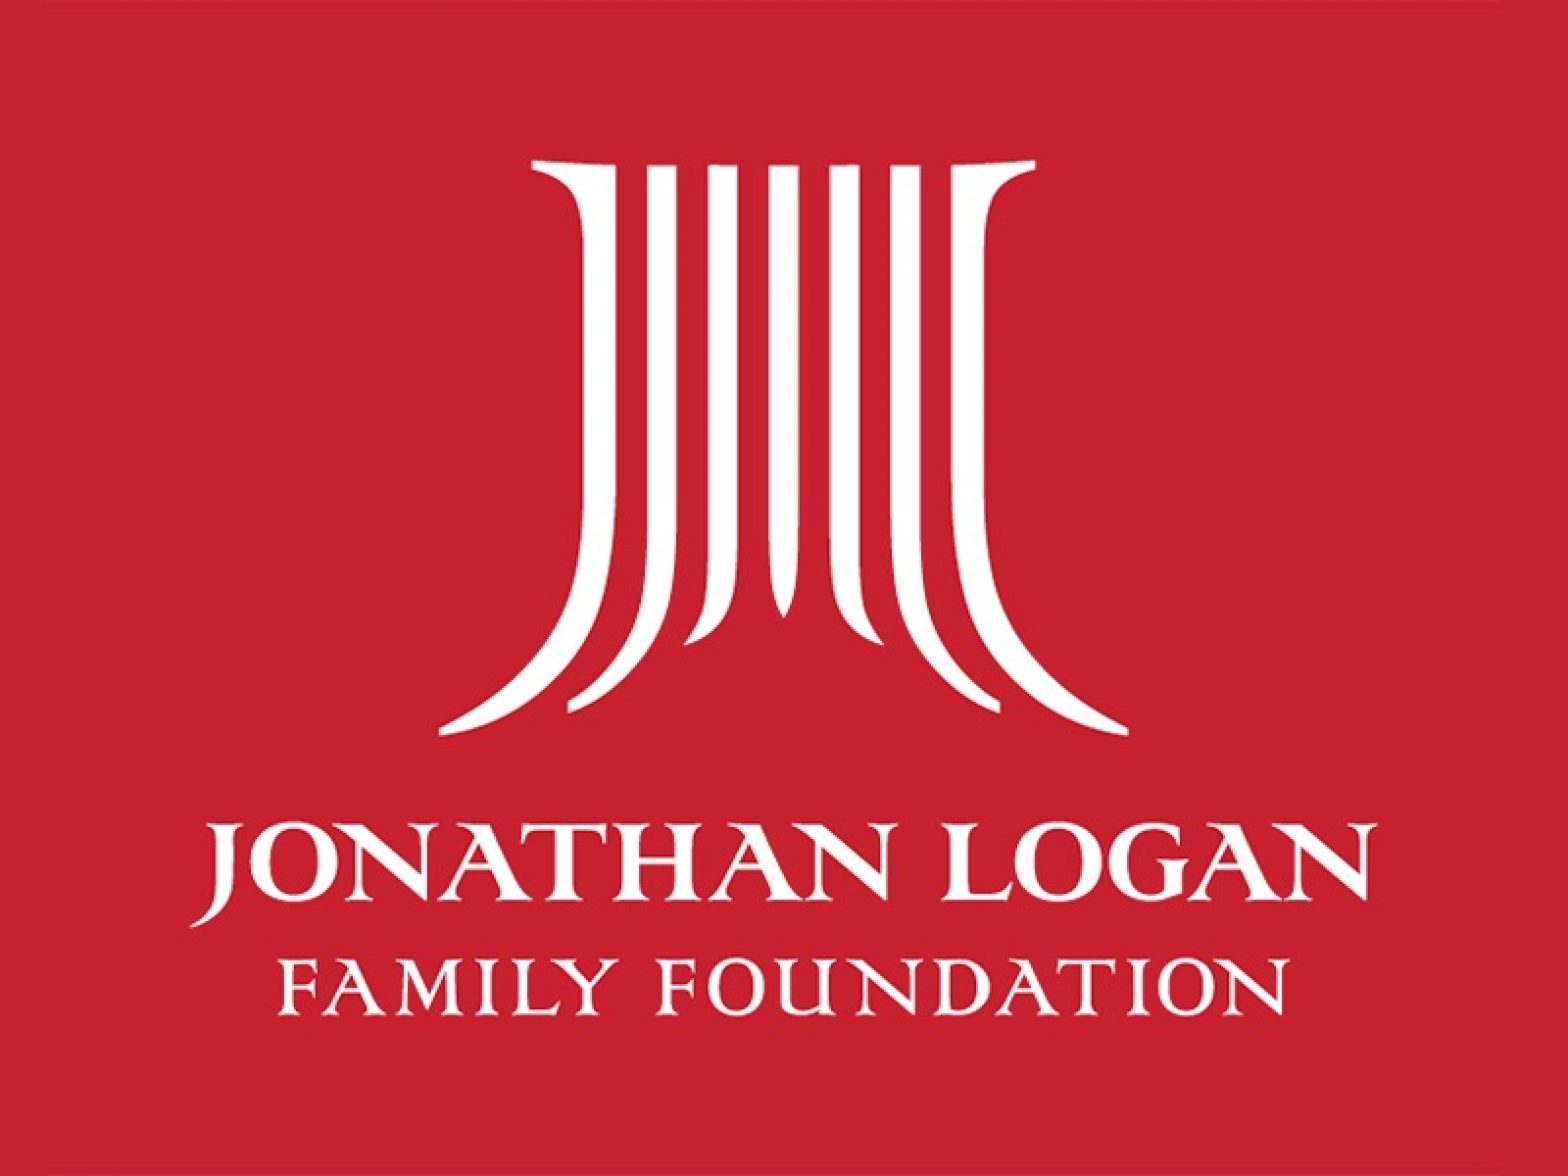 Jonathan Logan Family Foundation logo